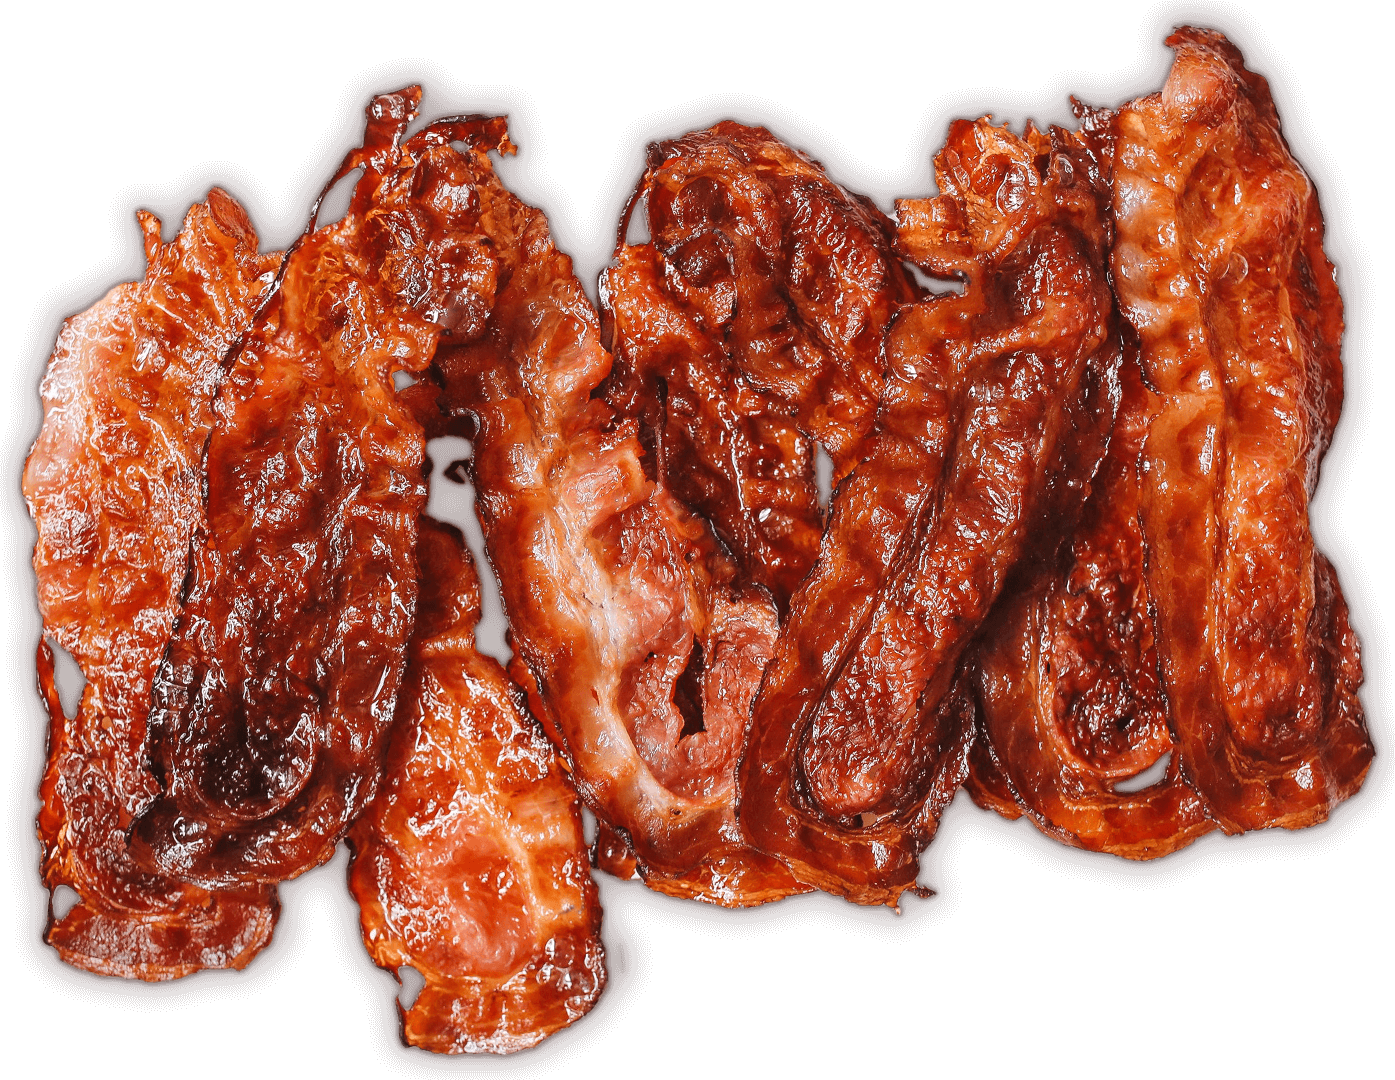 Get 50 Pounds of Delicious Farm-Fresh Bacon for Free - Nutrafarms - Bacon 1